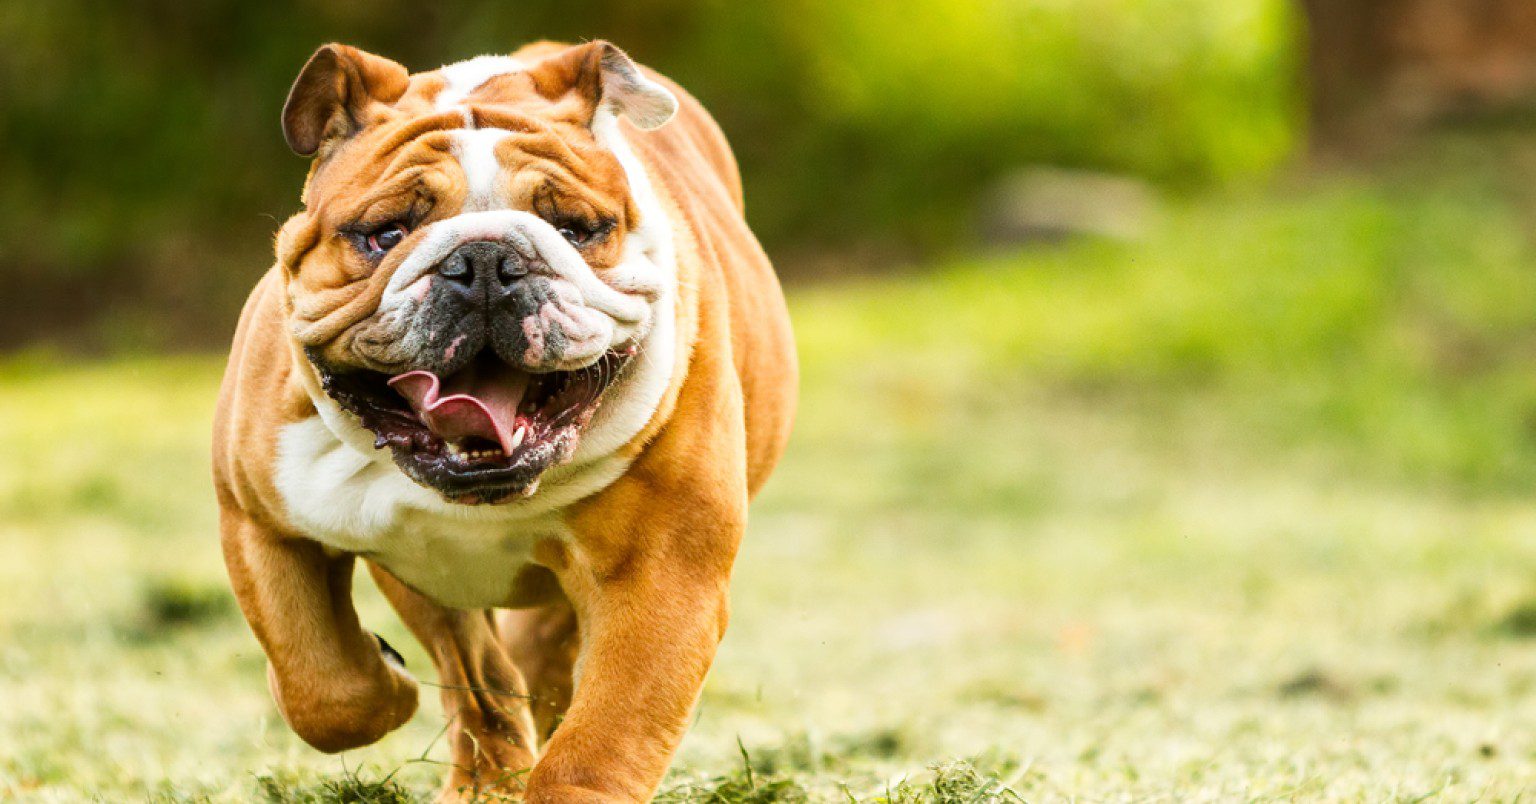 Photograph of an English Bulldog running toward the camera